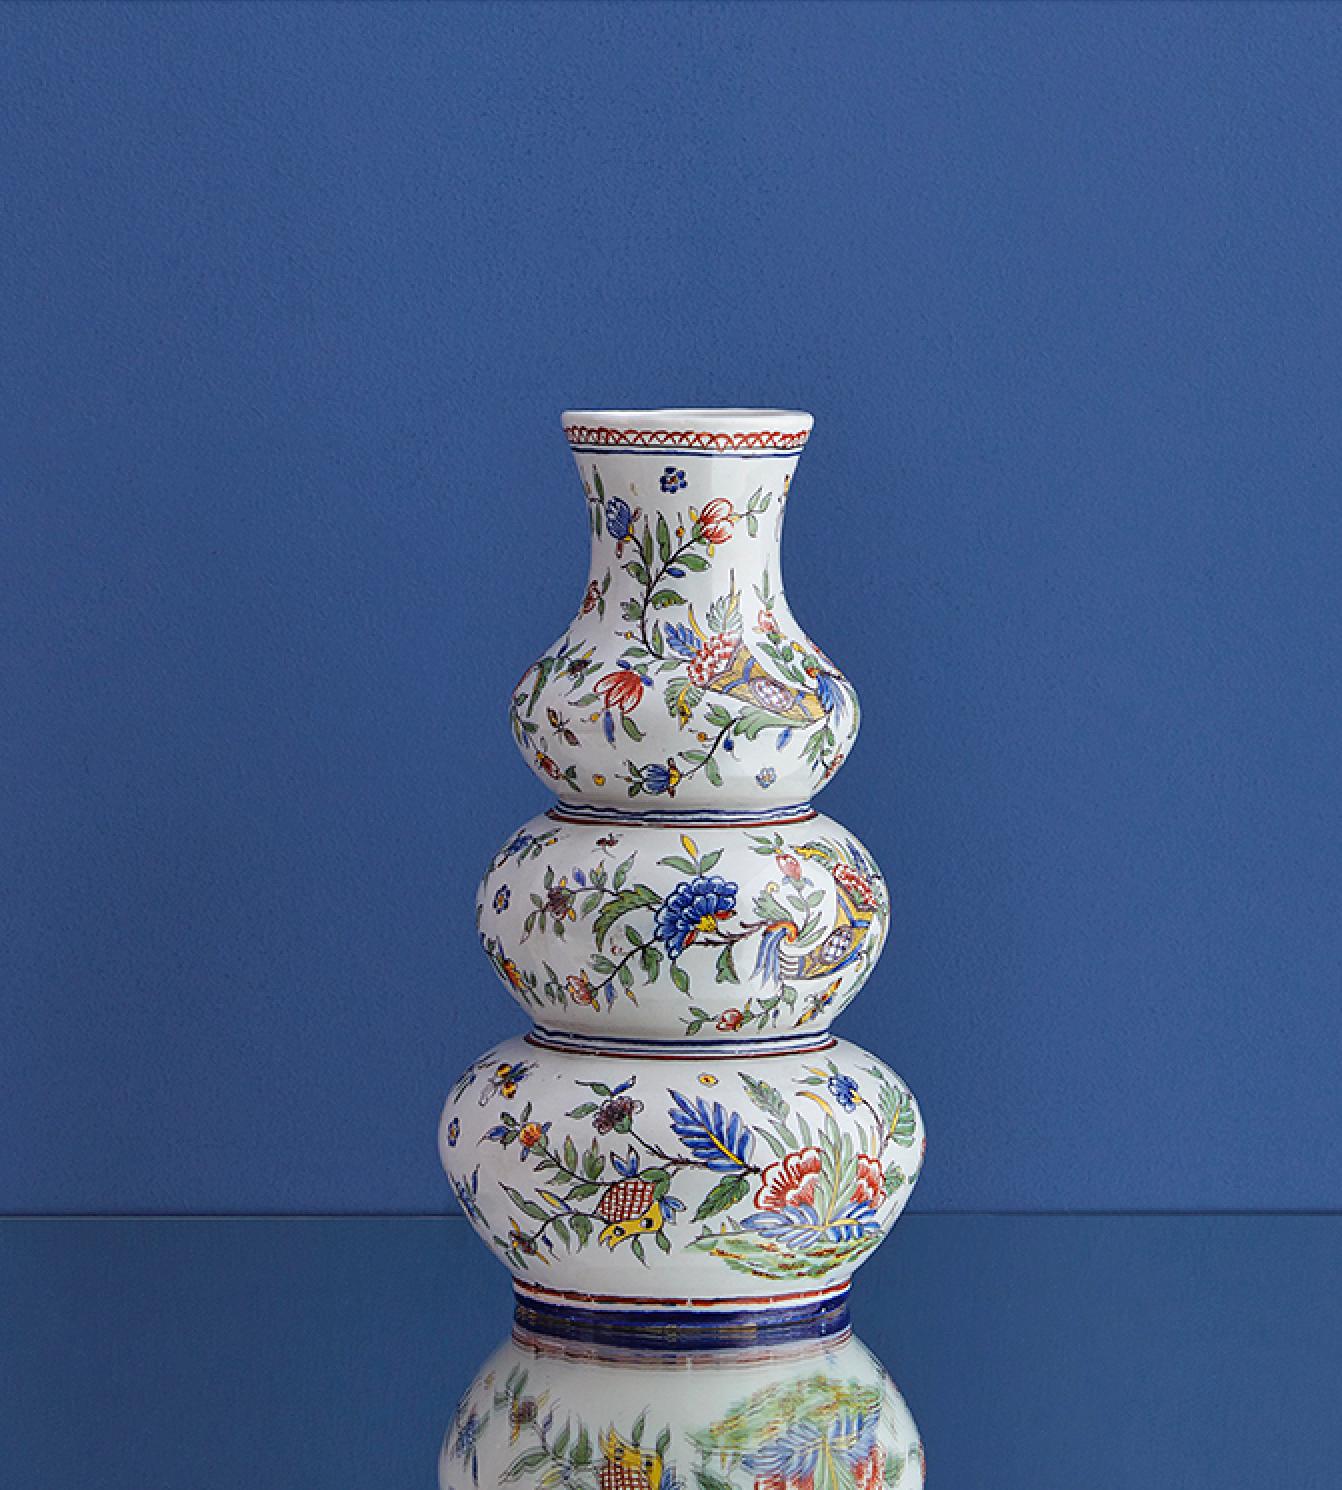 France, 19th century.

Ceramic vase.

Measures: H 26 x Ø 14 cm